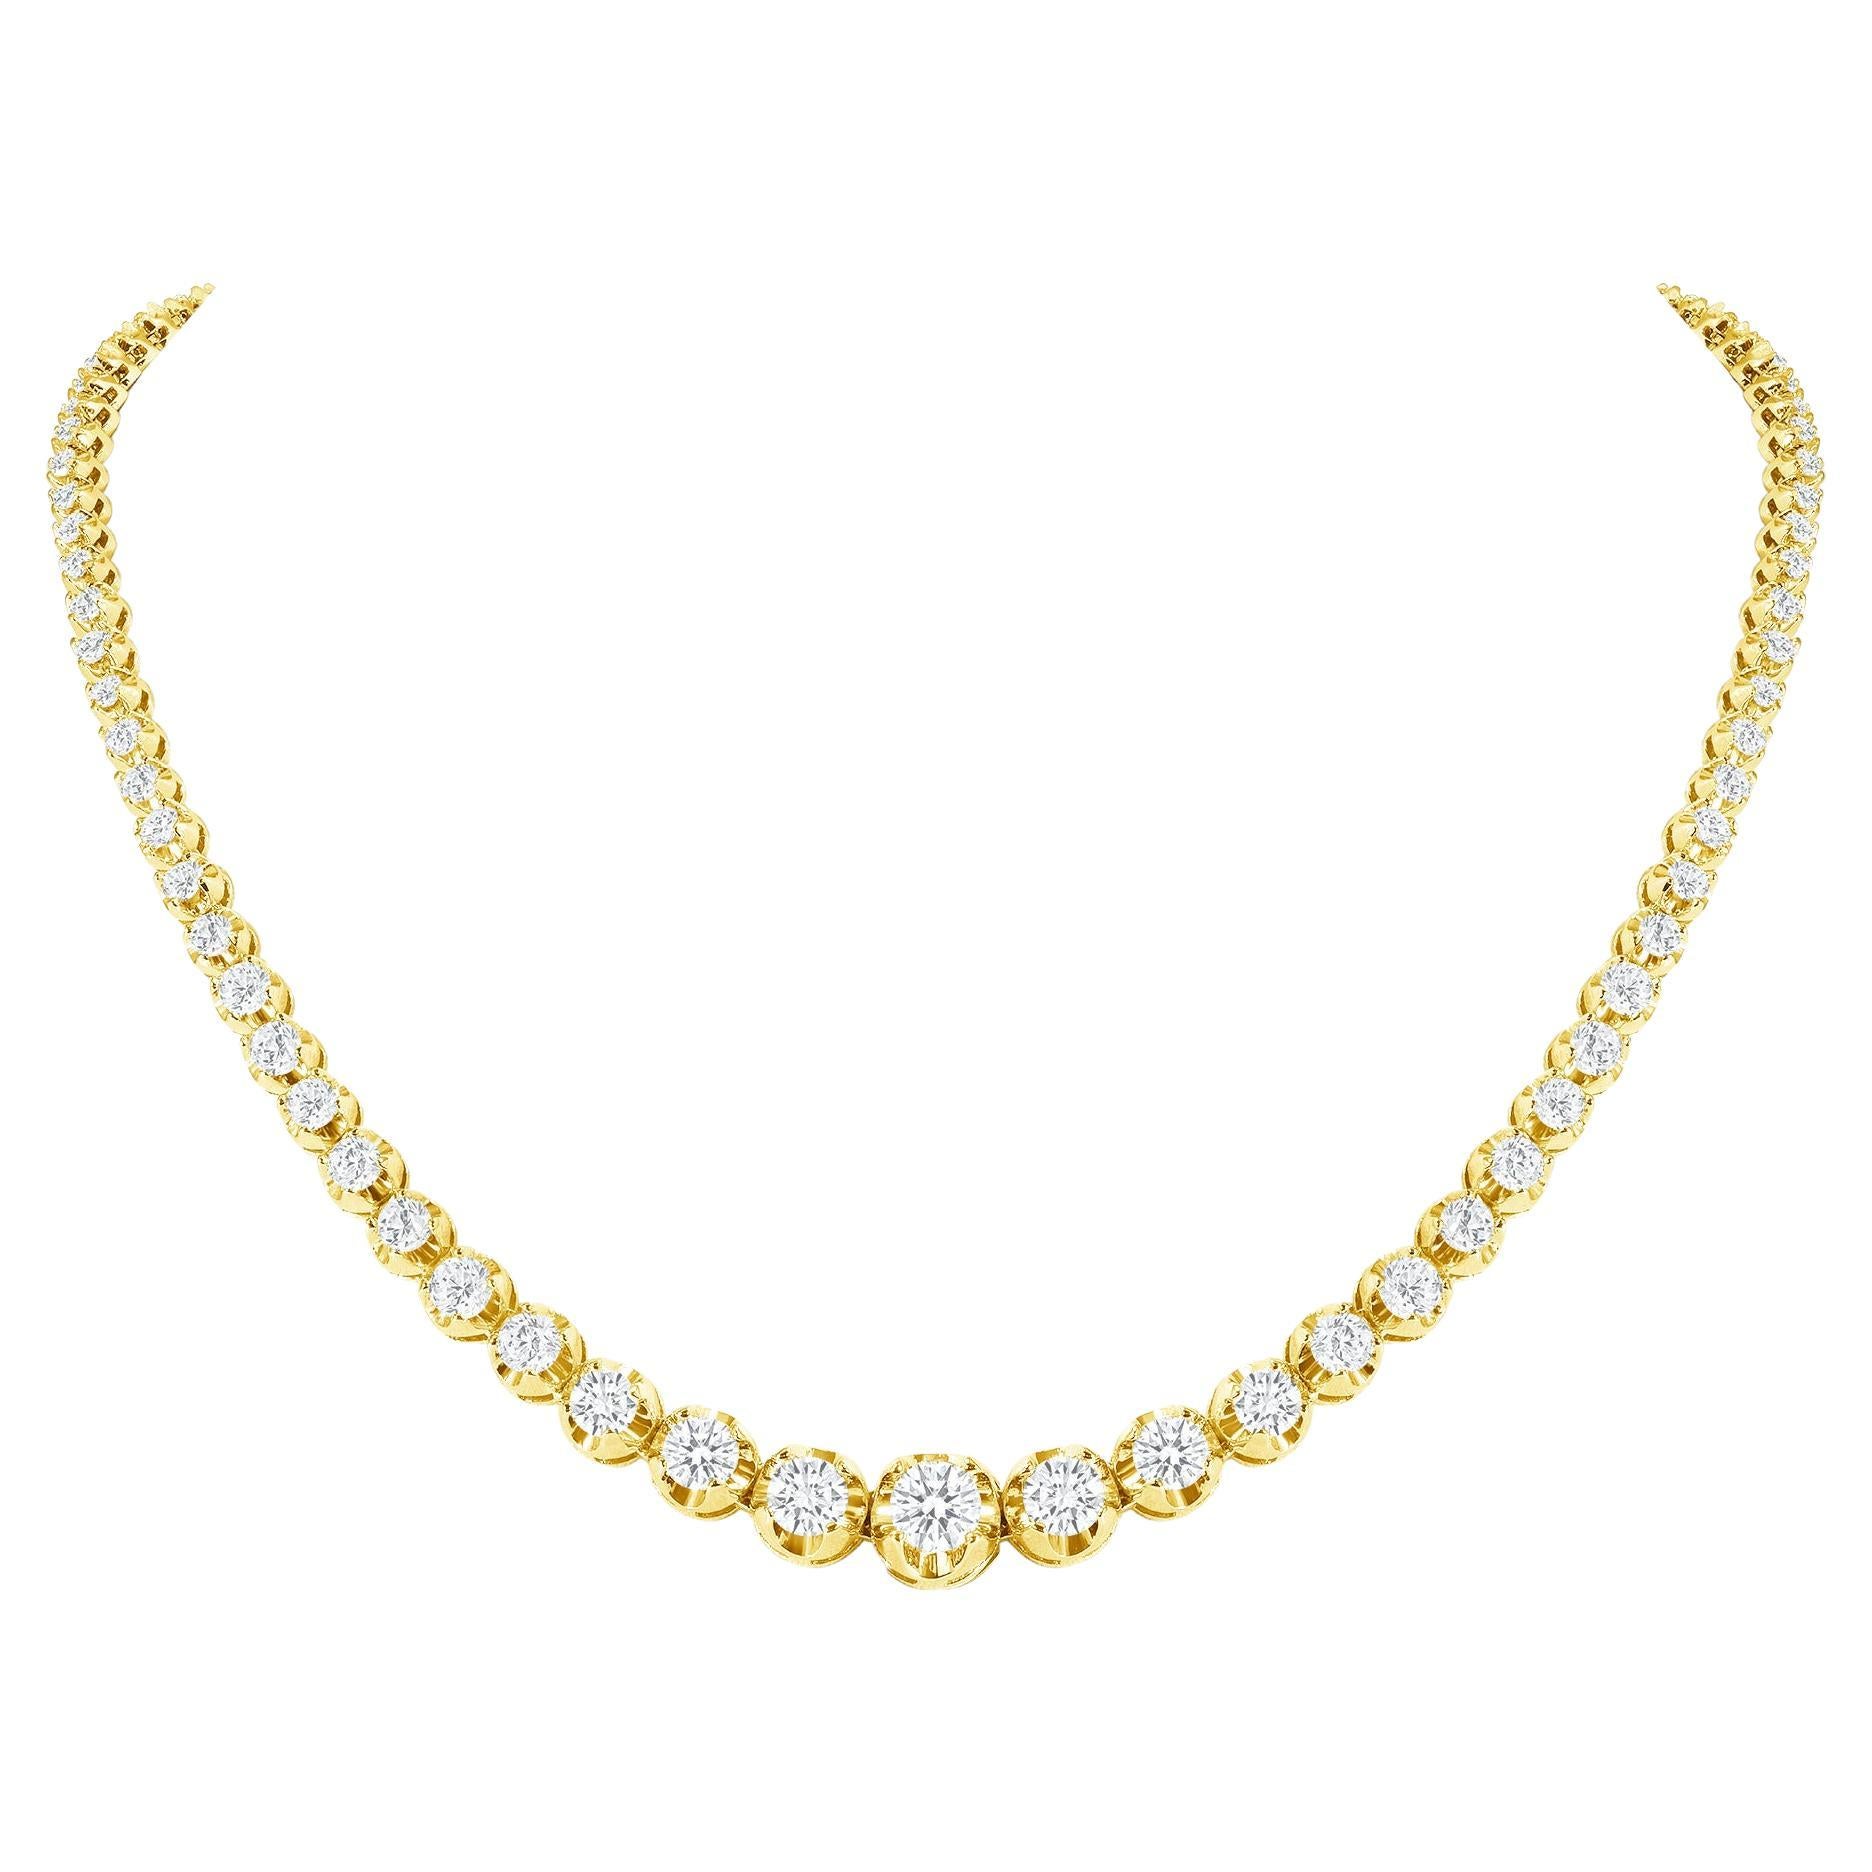 14k Yellow Gold 7 Carat Graduated Diamond Tennis Necklace Illusion Setting